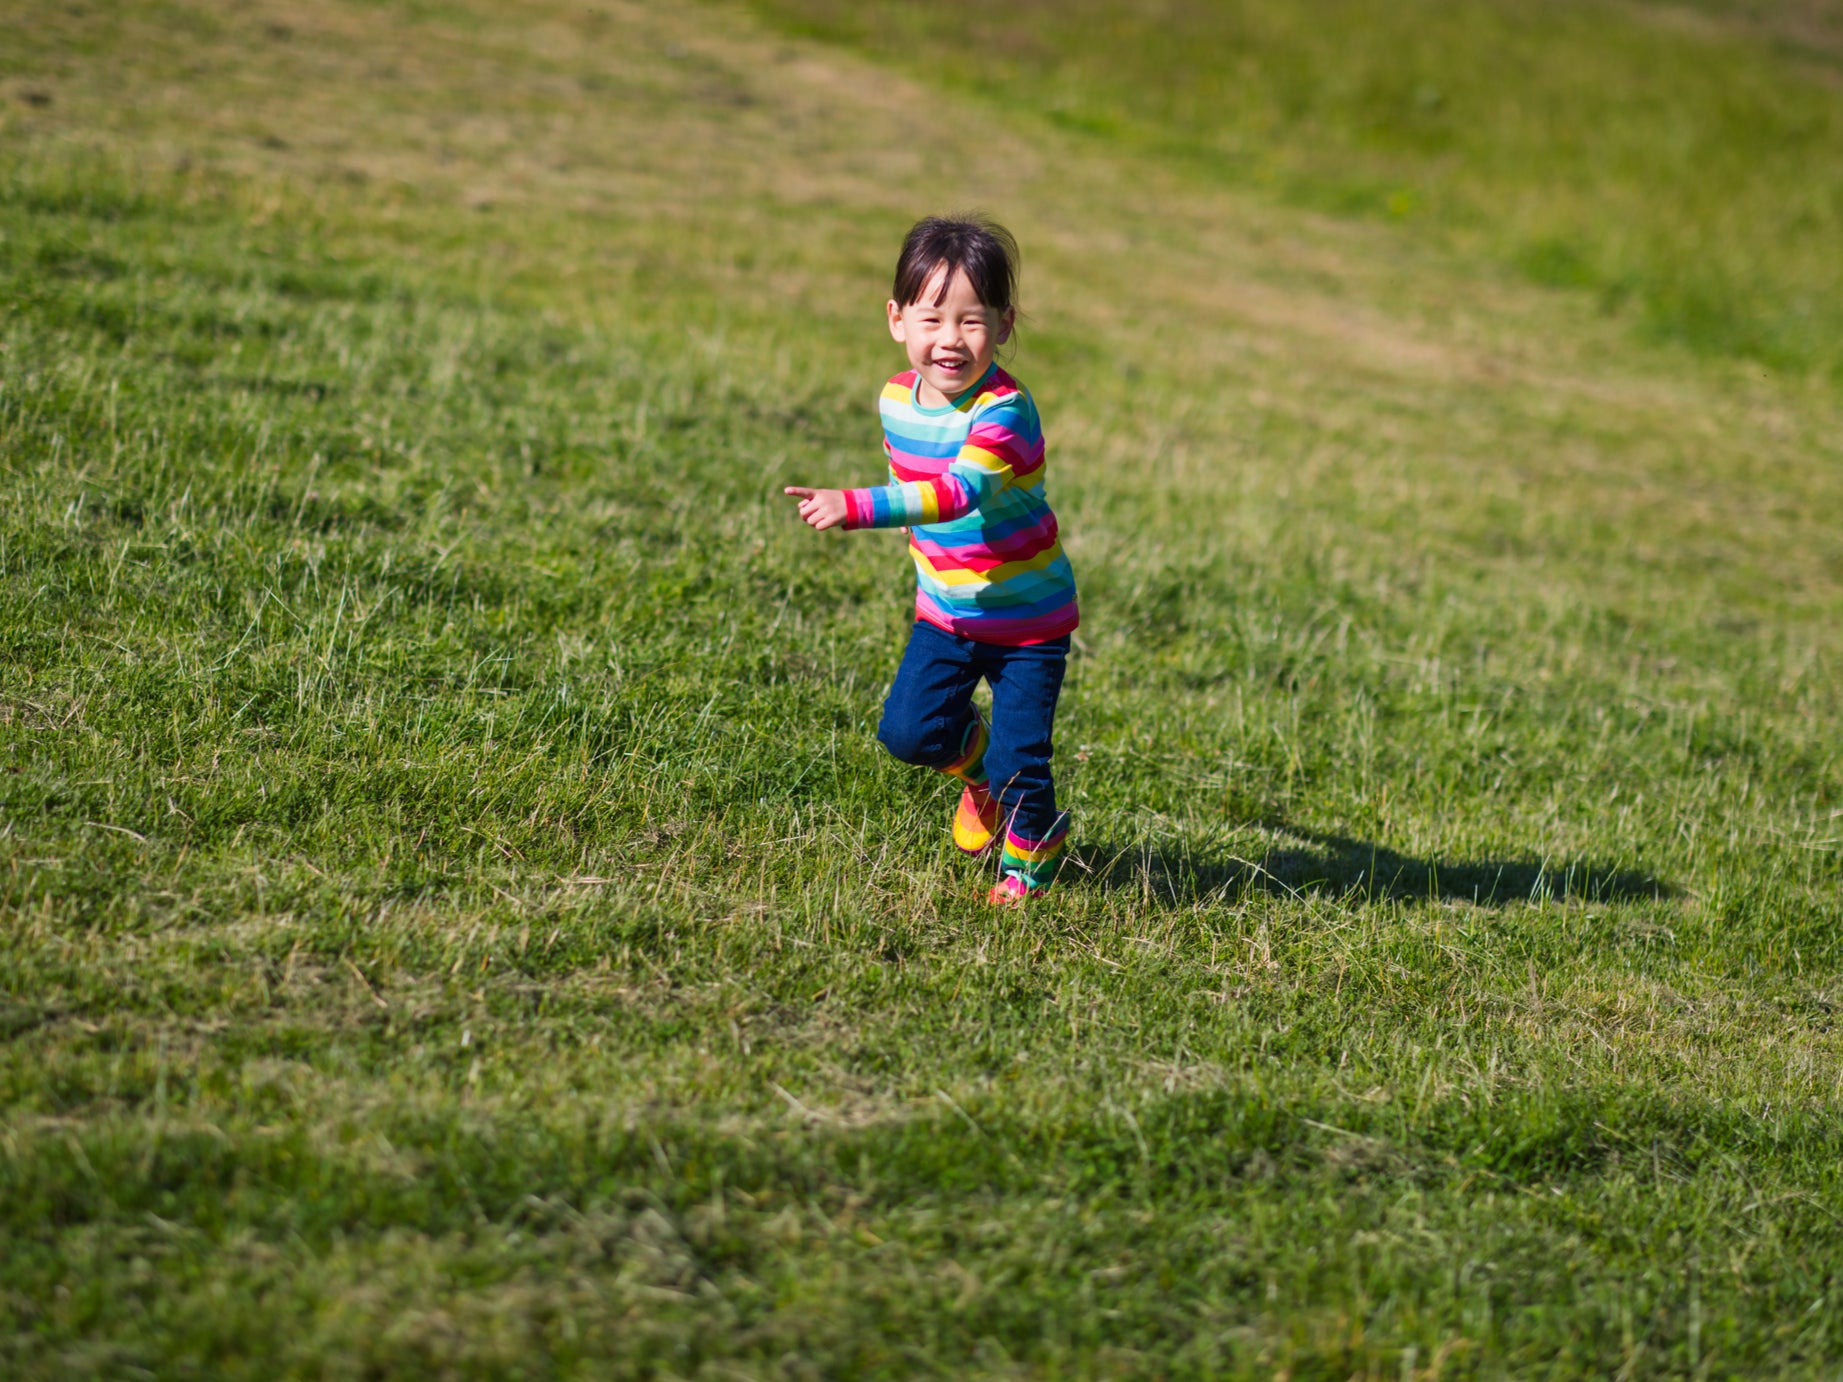 A young child runs across a field